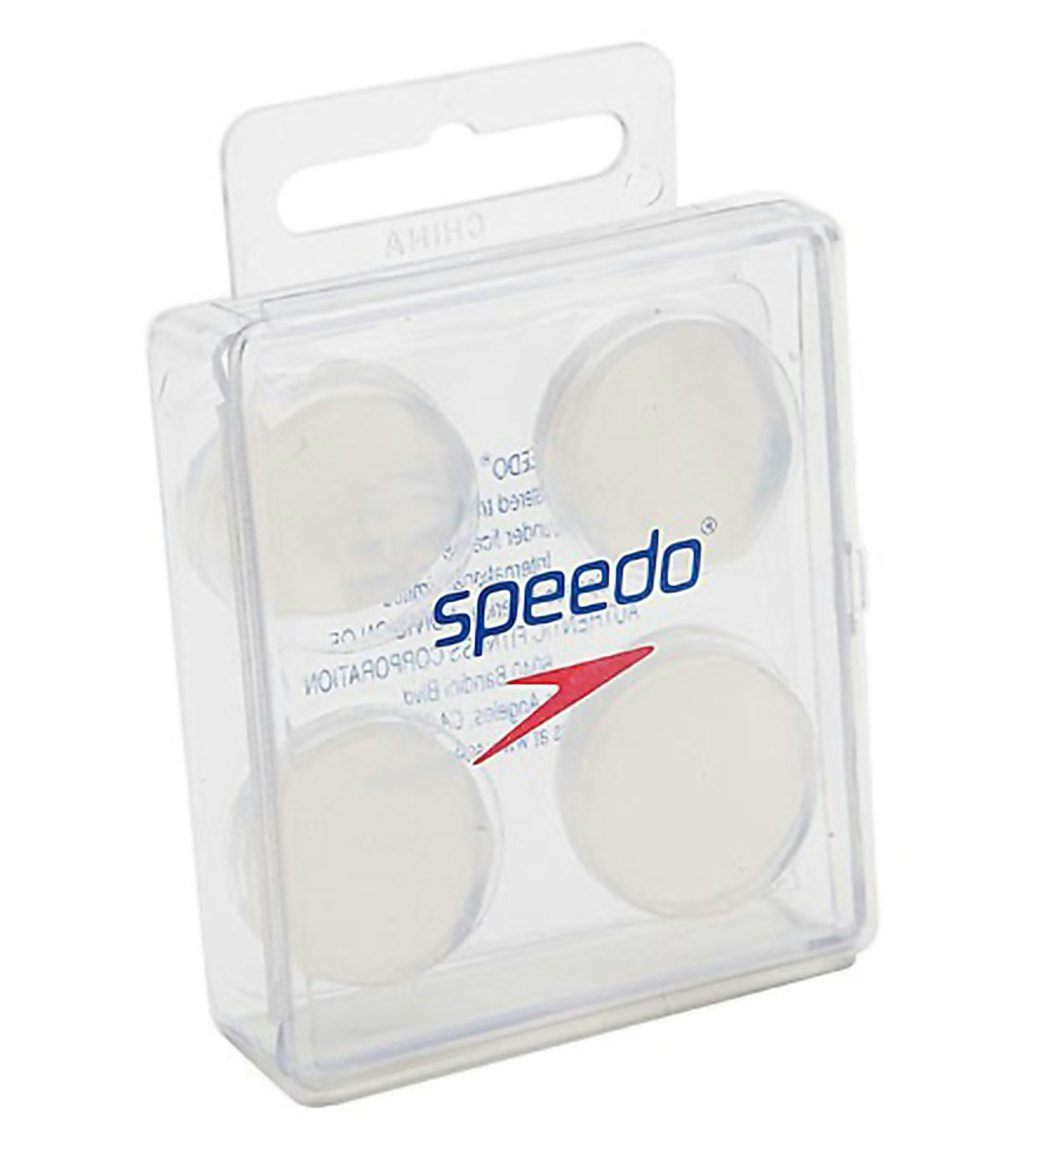 Speedo Silicone Ear Plugs, 4pk